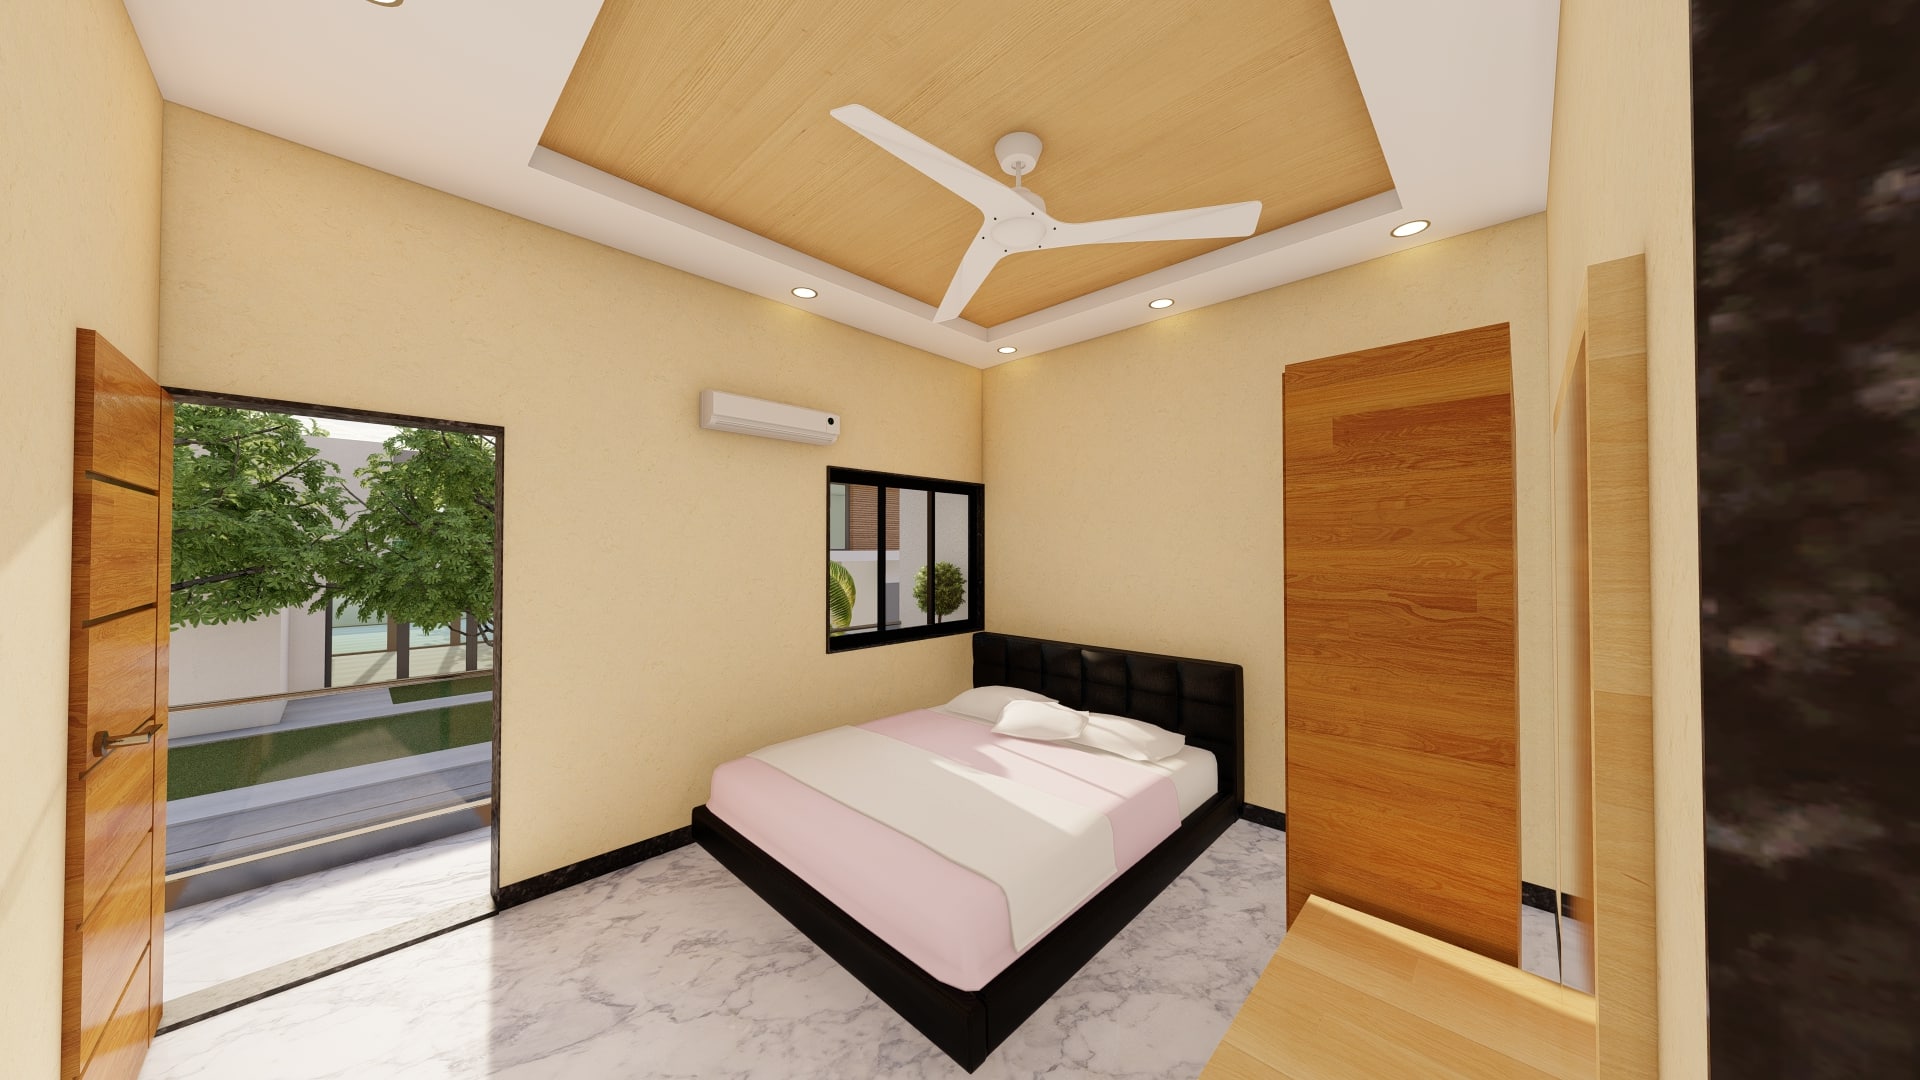 bedroom of new duplex layout design north facing 1000 sq ft urban terrace